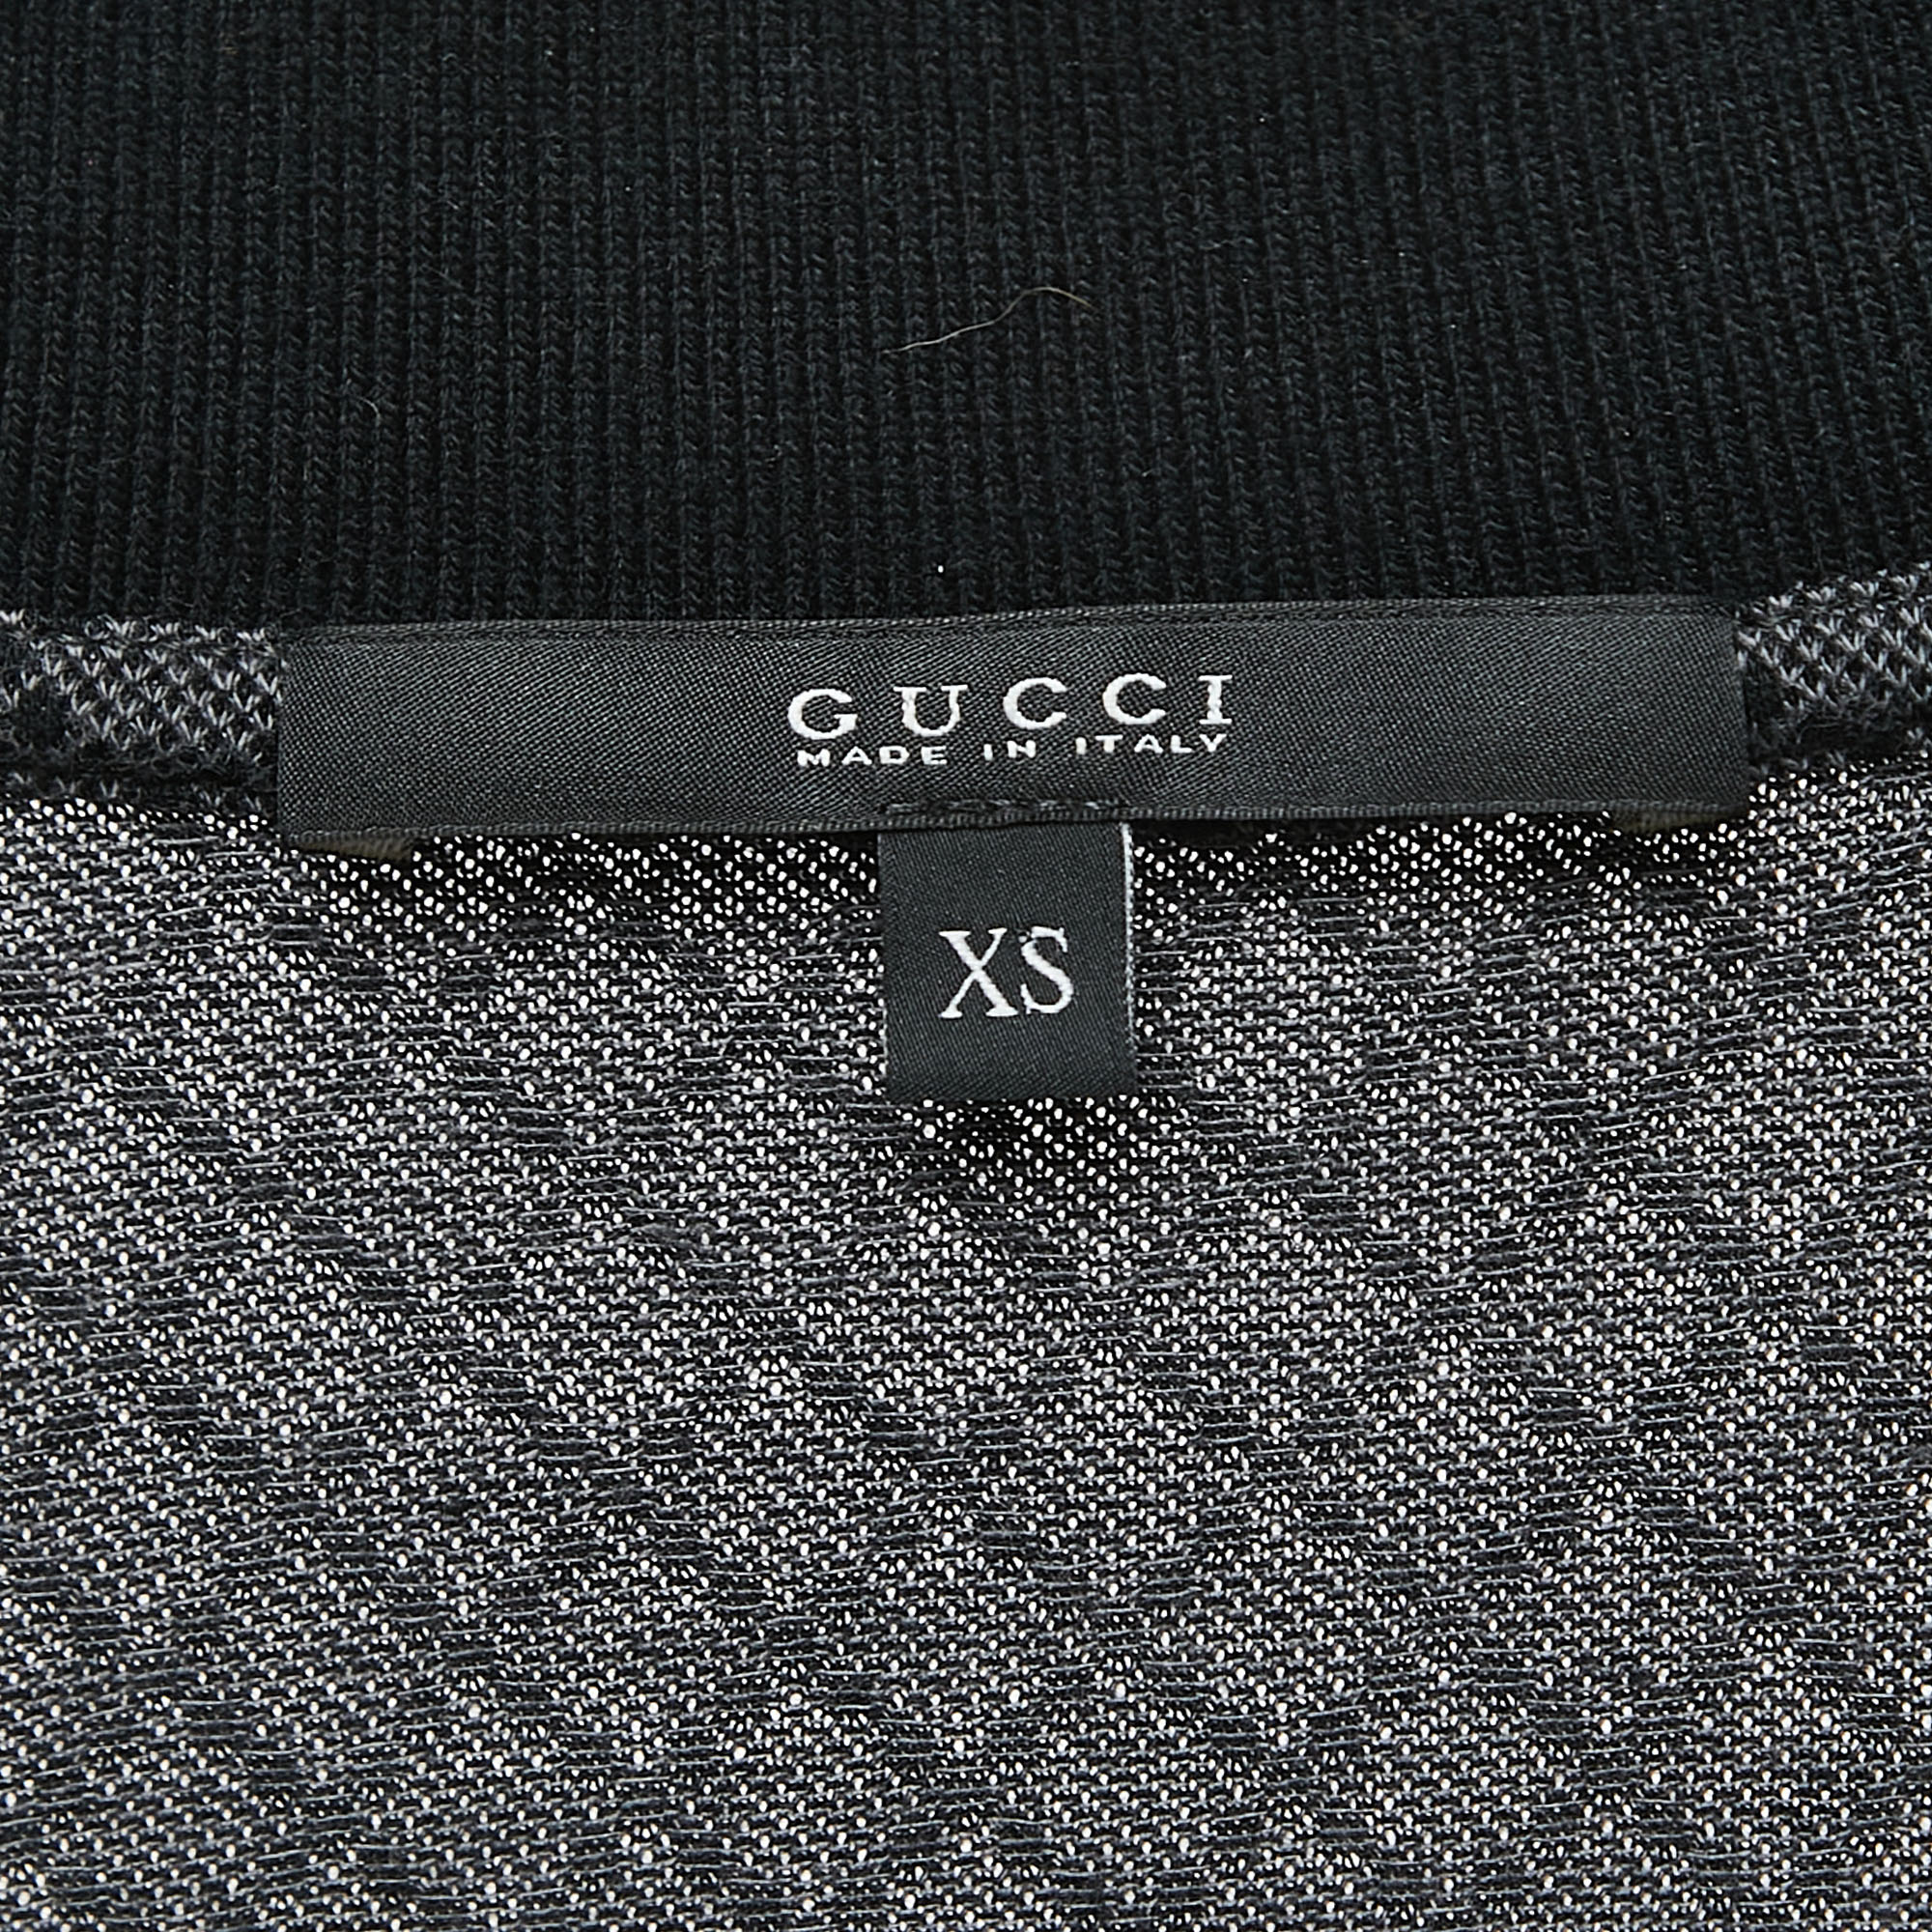 Gucci Black Patterned Cotton Web Stripe Detailed Polo T-Shirt XS